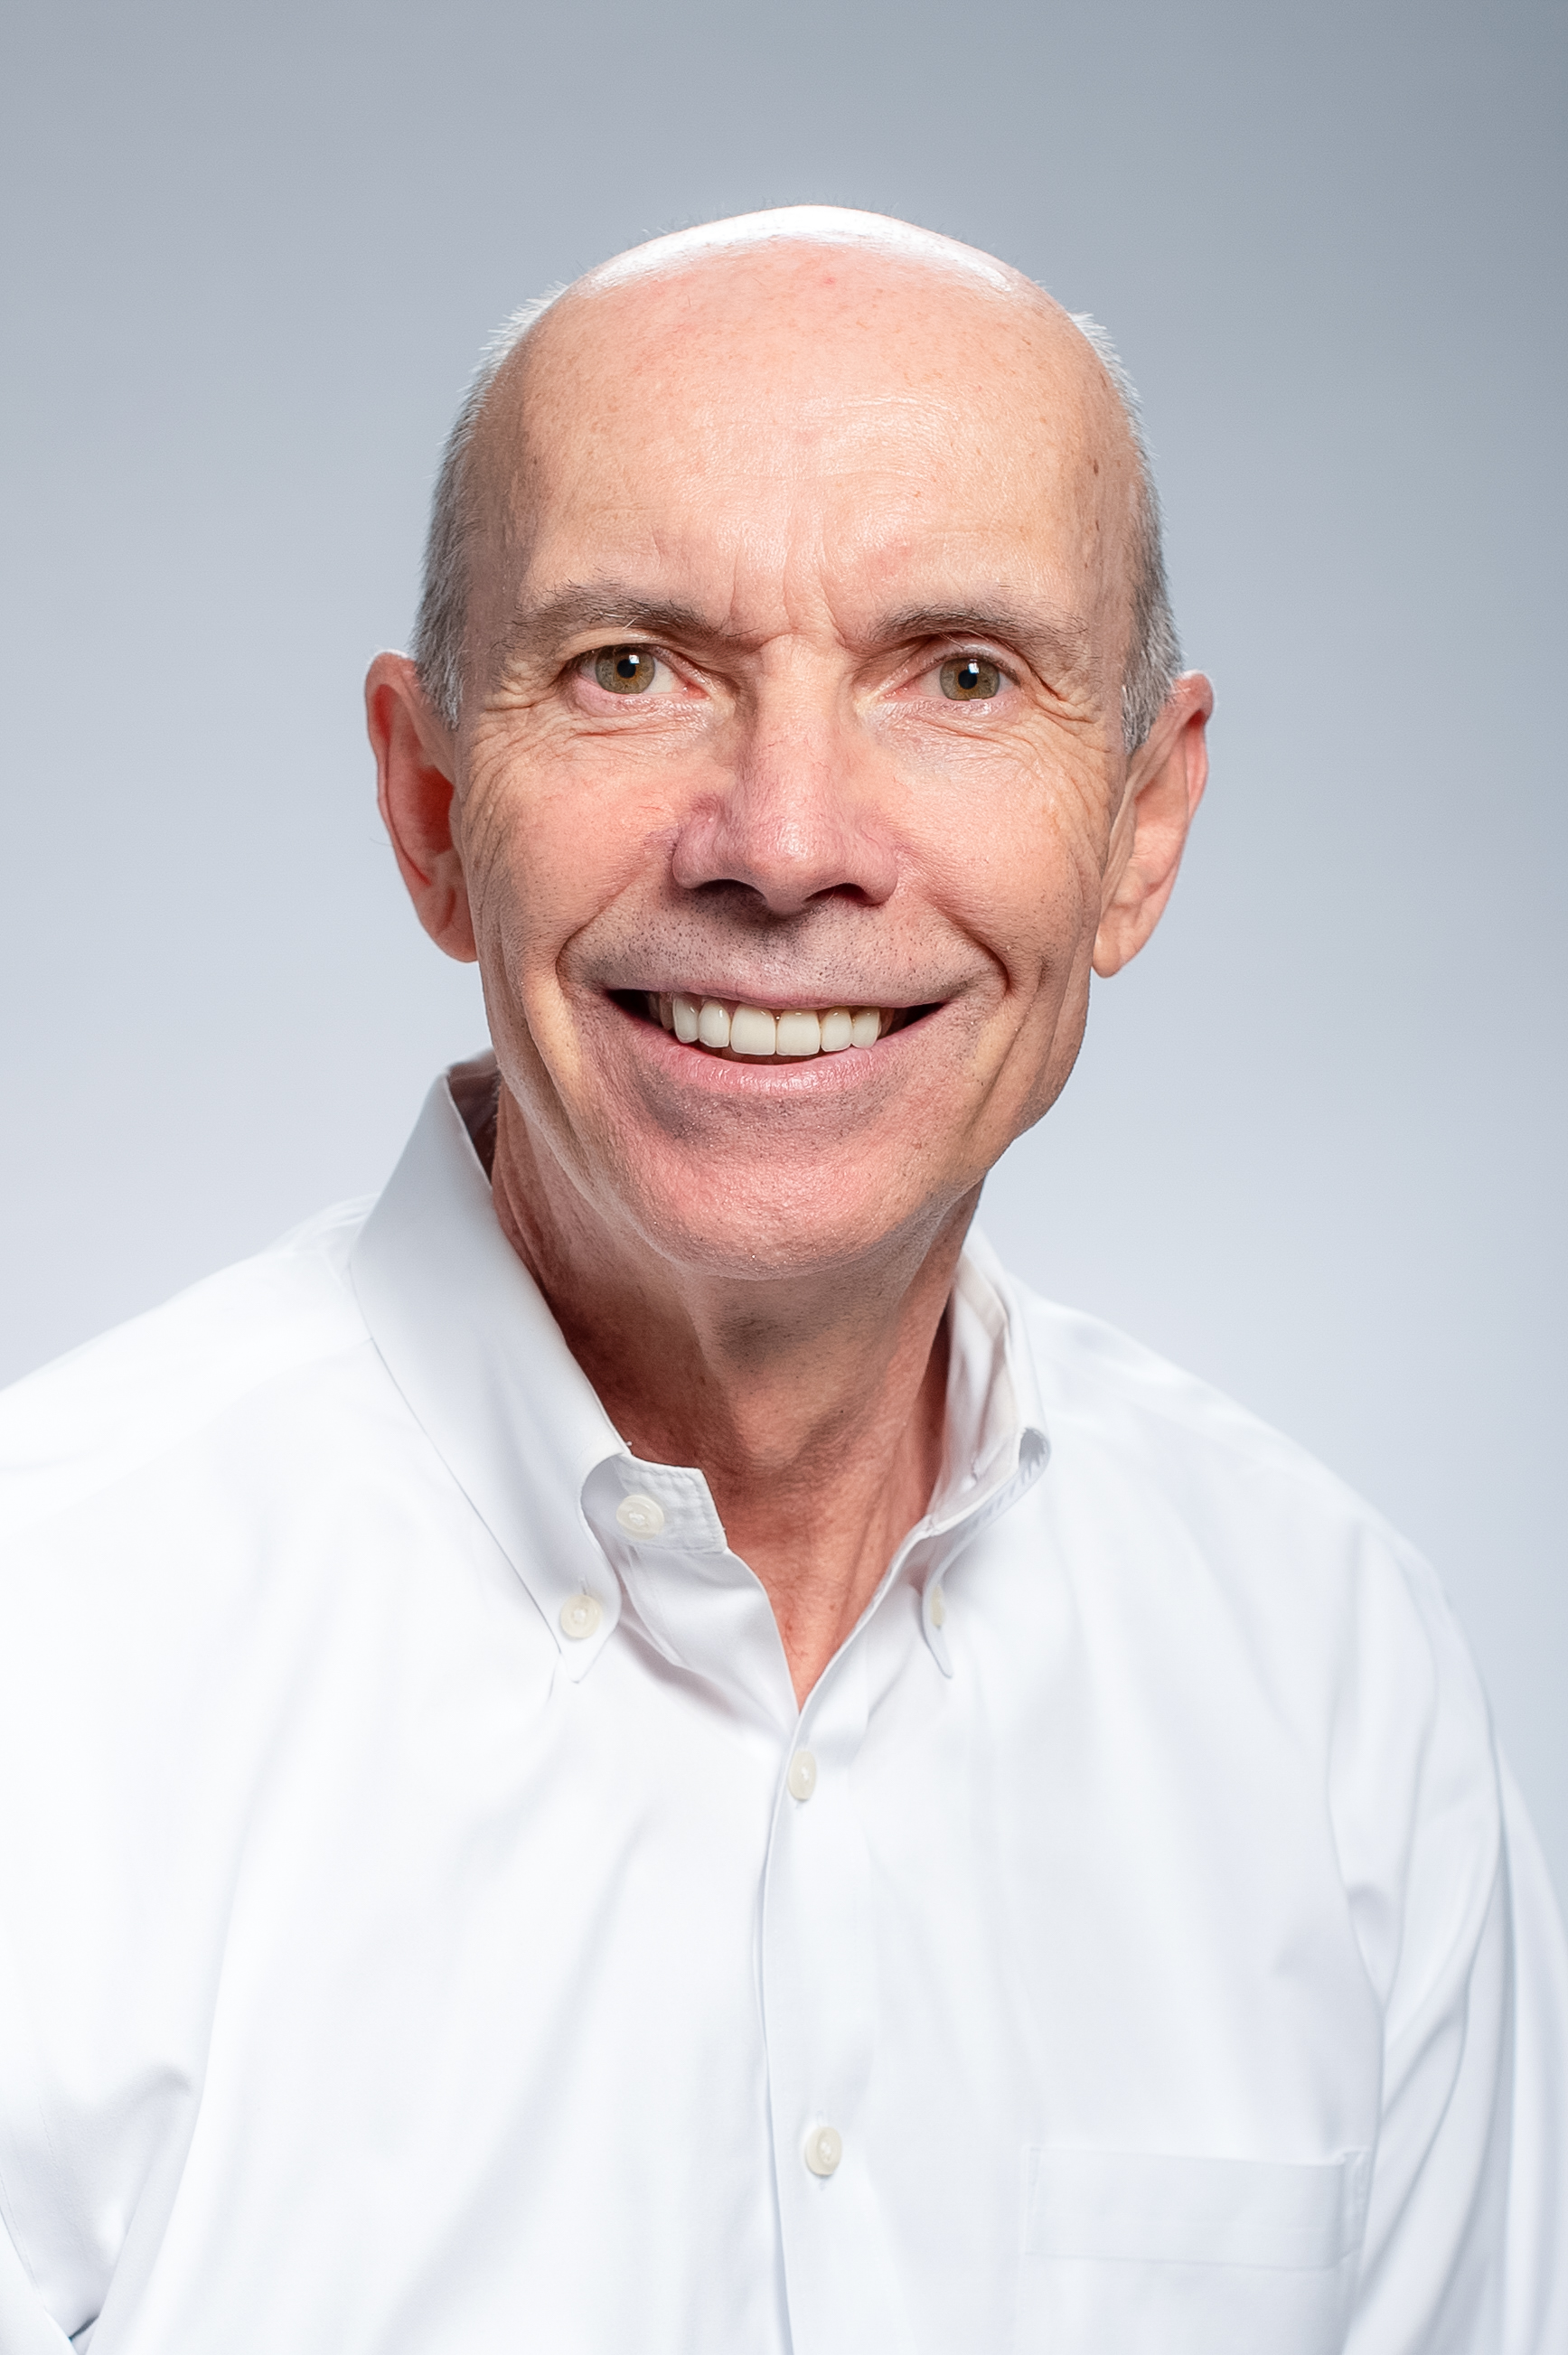 Head shot of Dr. Robert Hardy, PhD (Professor, Laboratory Medicine), 2019.